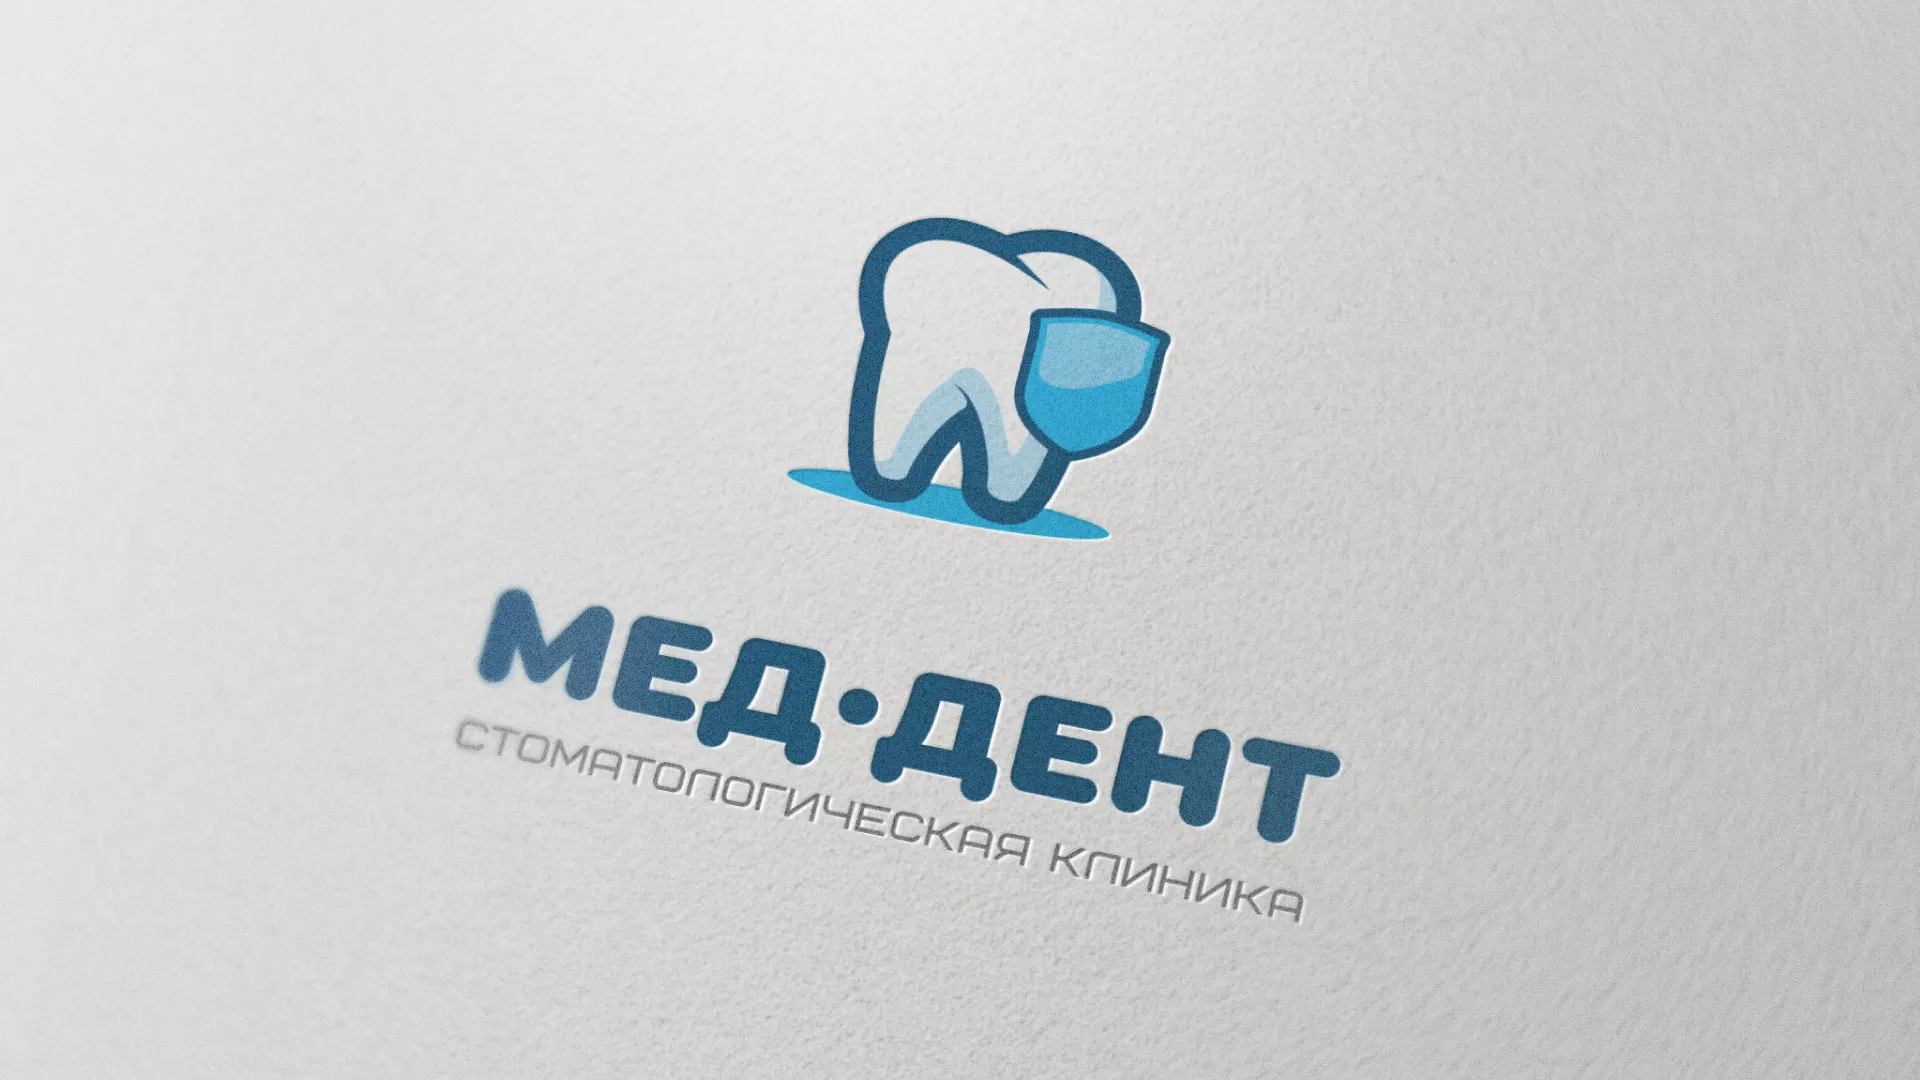 Разработка логотипа стоматологической клиники «МЕД-ДЕНТ» в Кяхте